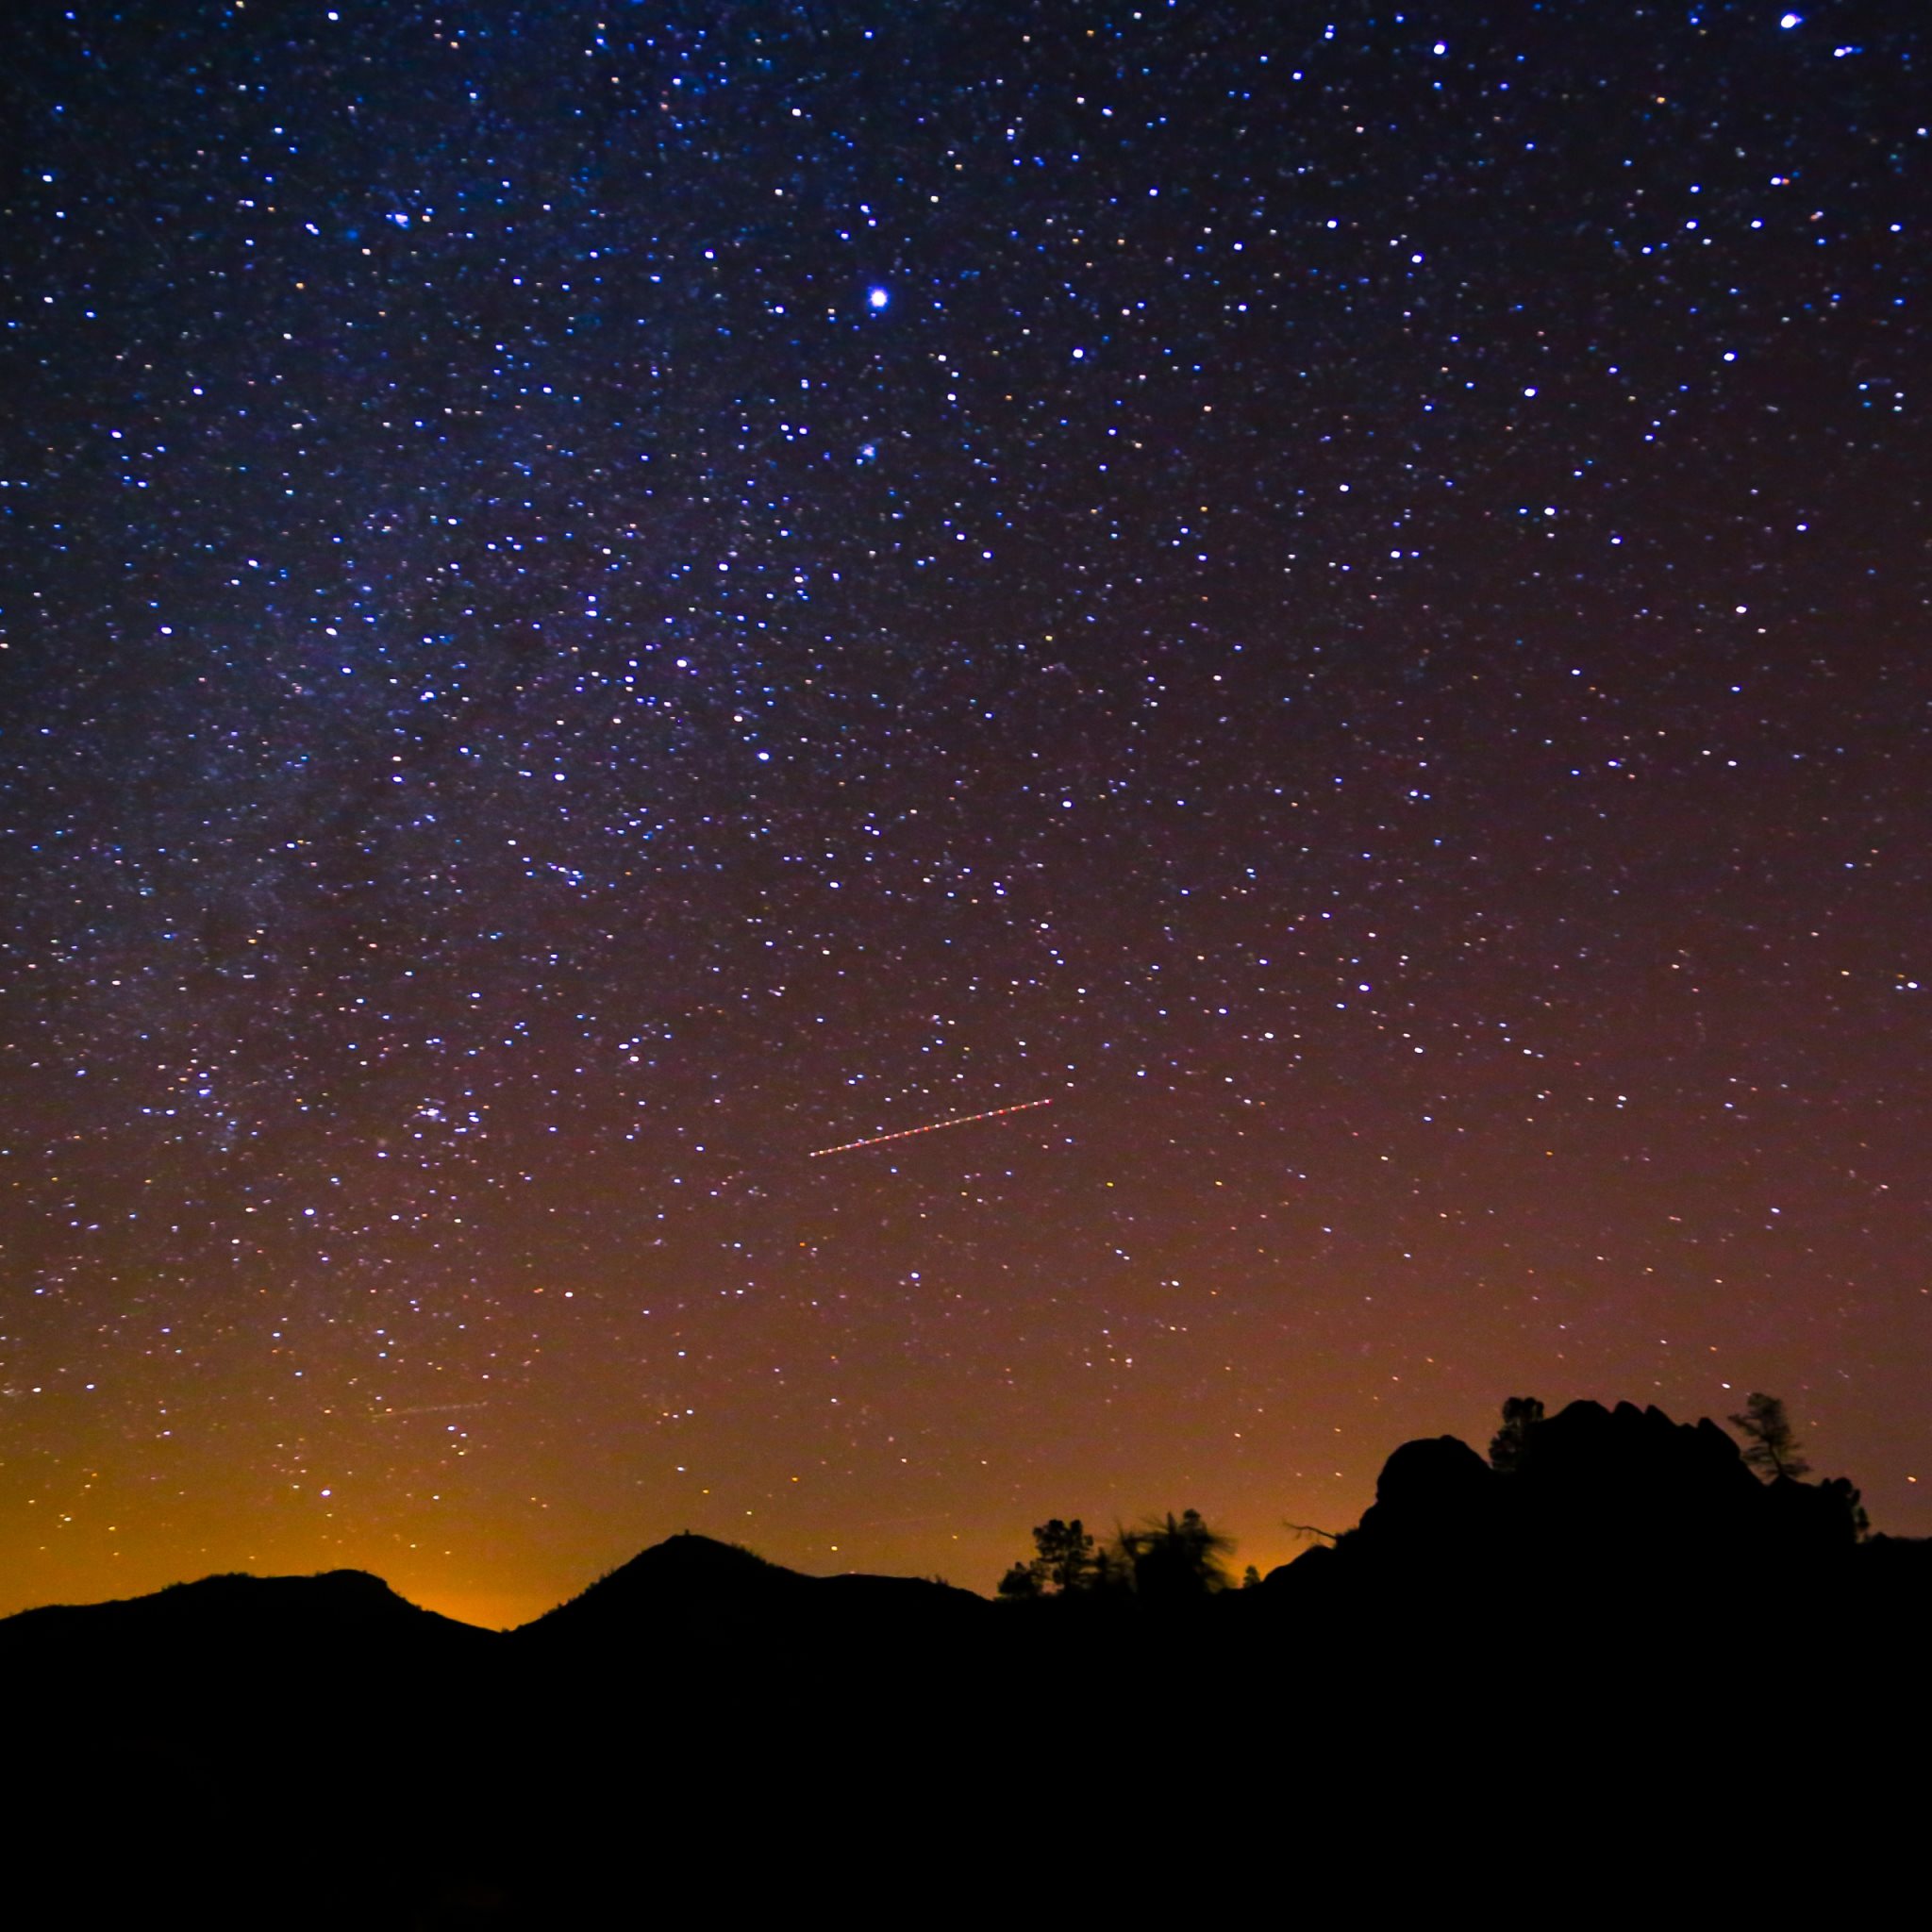 Milky Way Constellation On The Night Sky HD Wallpaper 4k